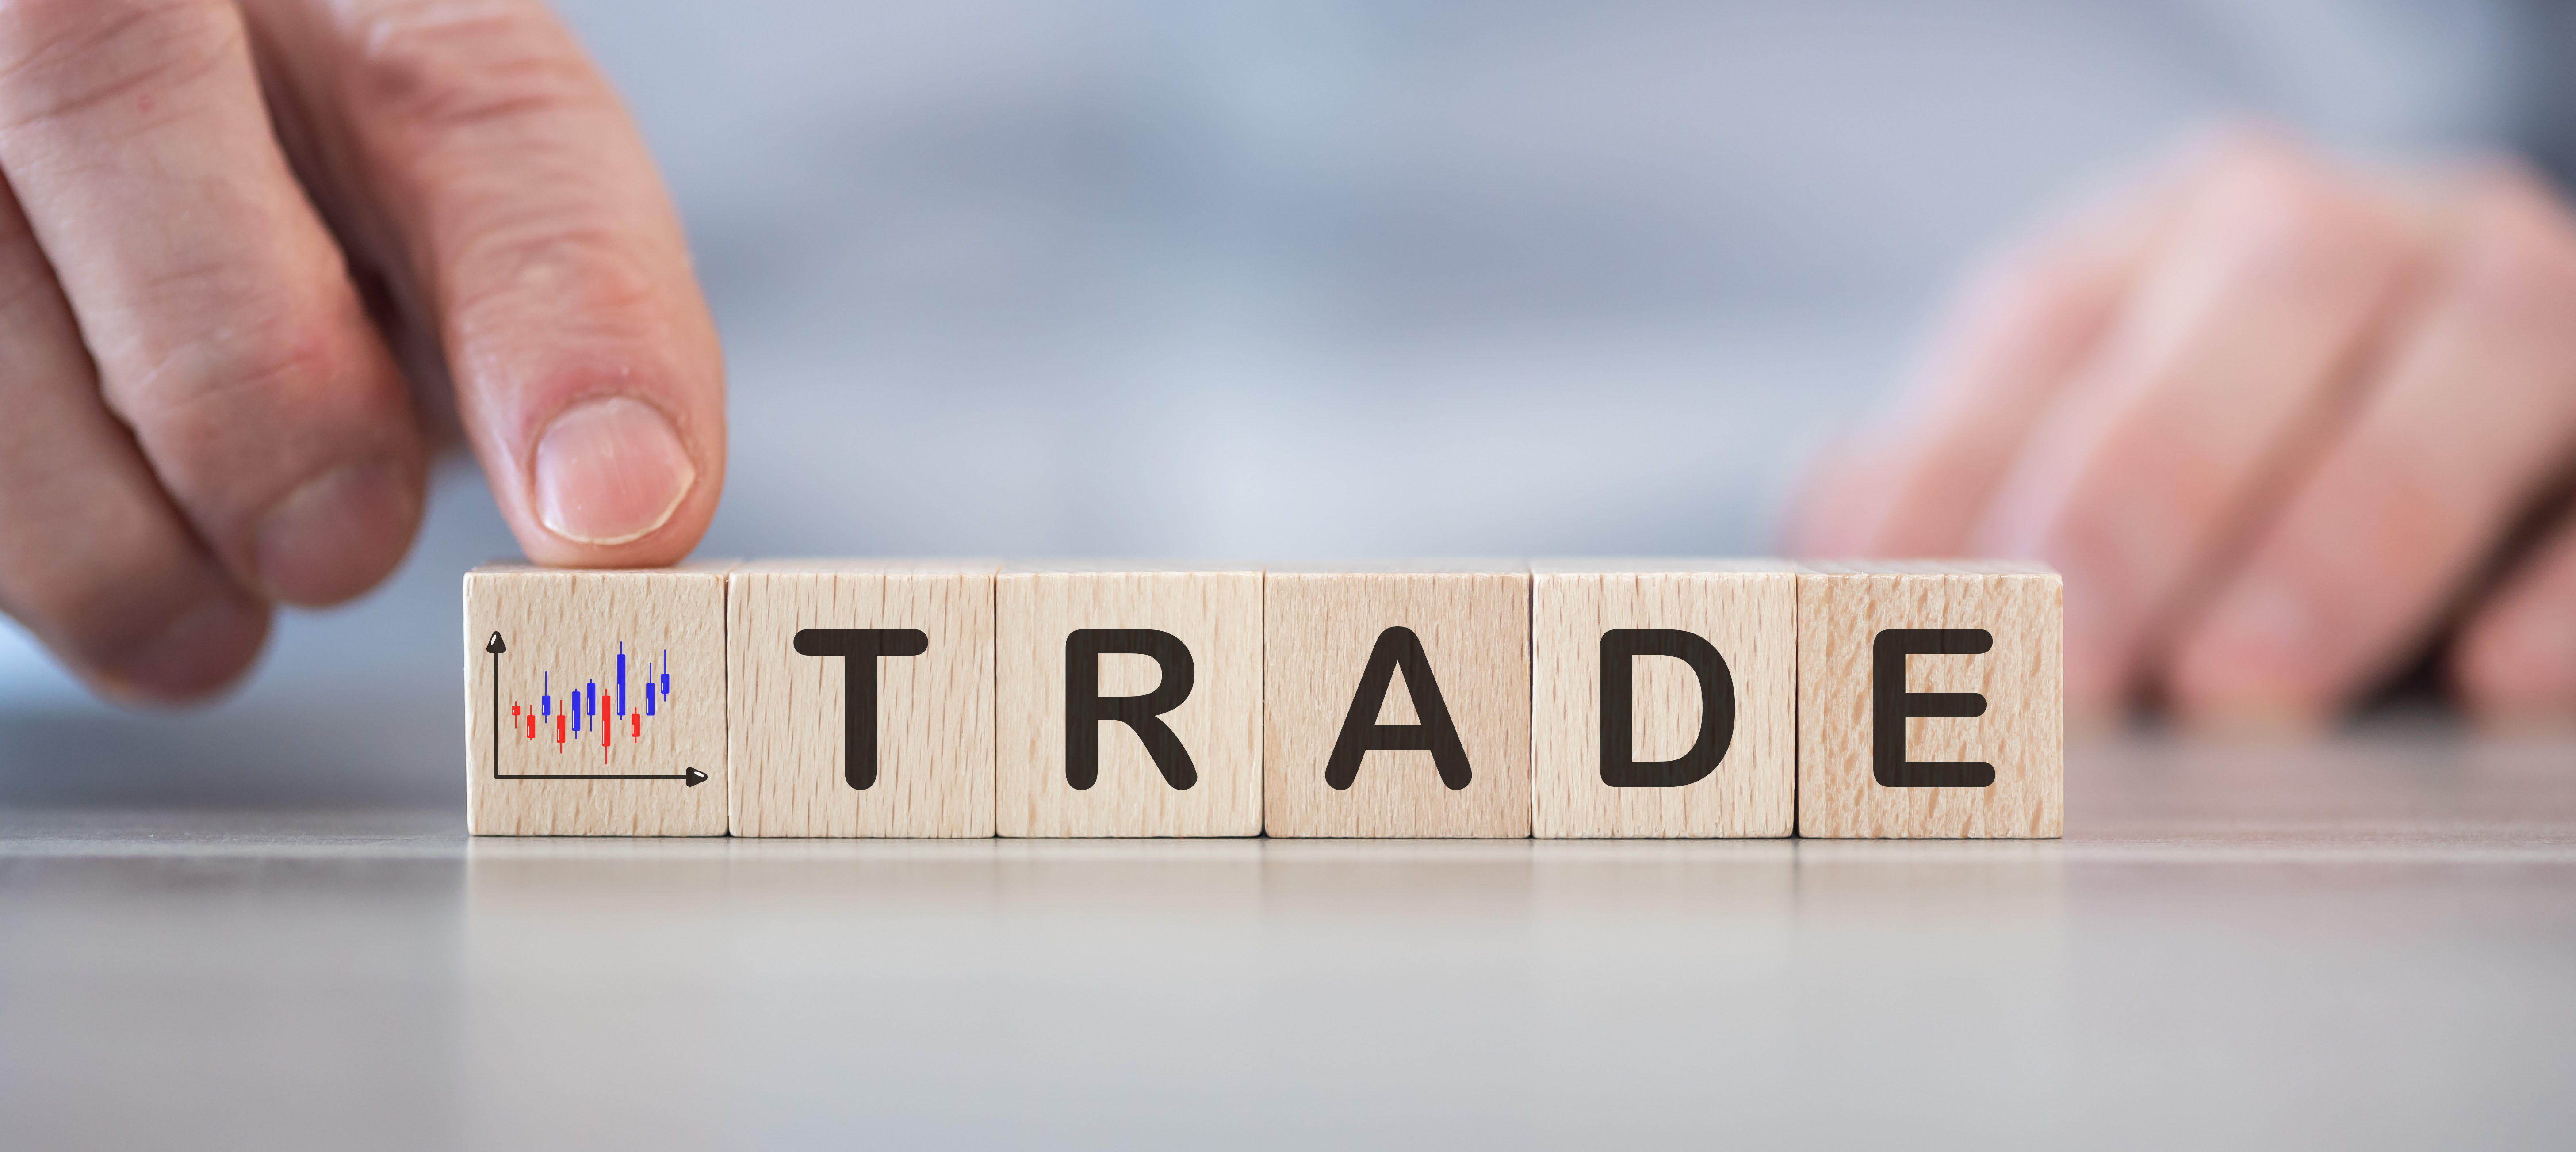 Trade Finance - Unlock those opportunities